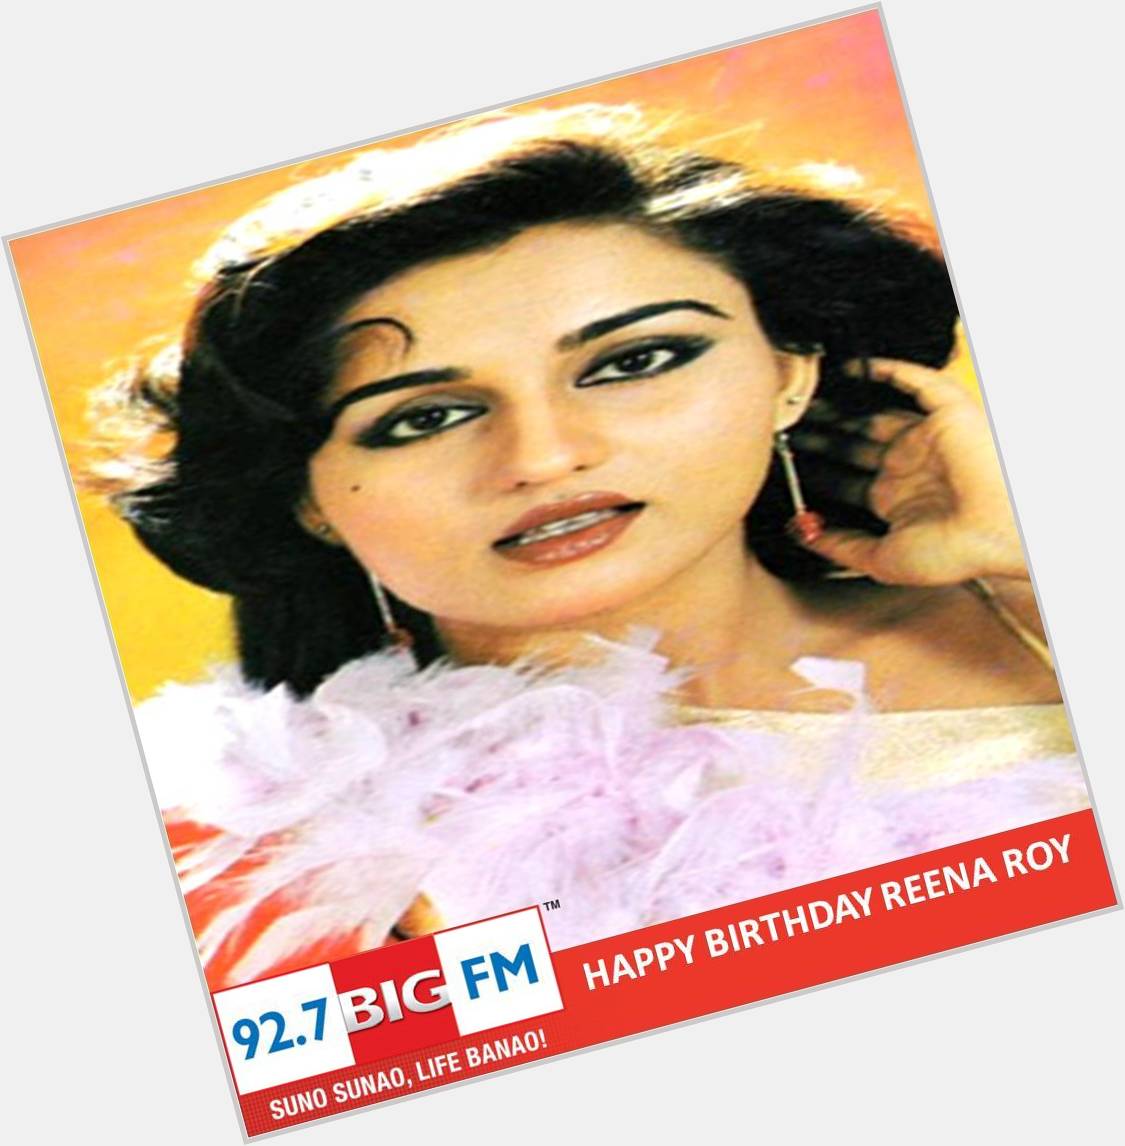 92.7 BIG FM wishes Reena Roy a very Happy Birthday ! 